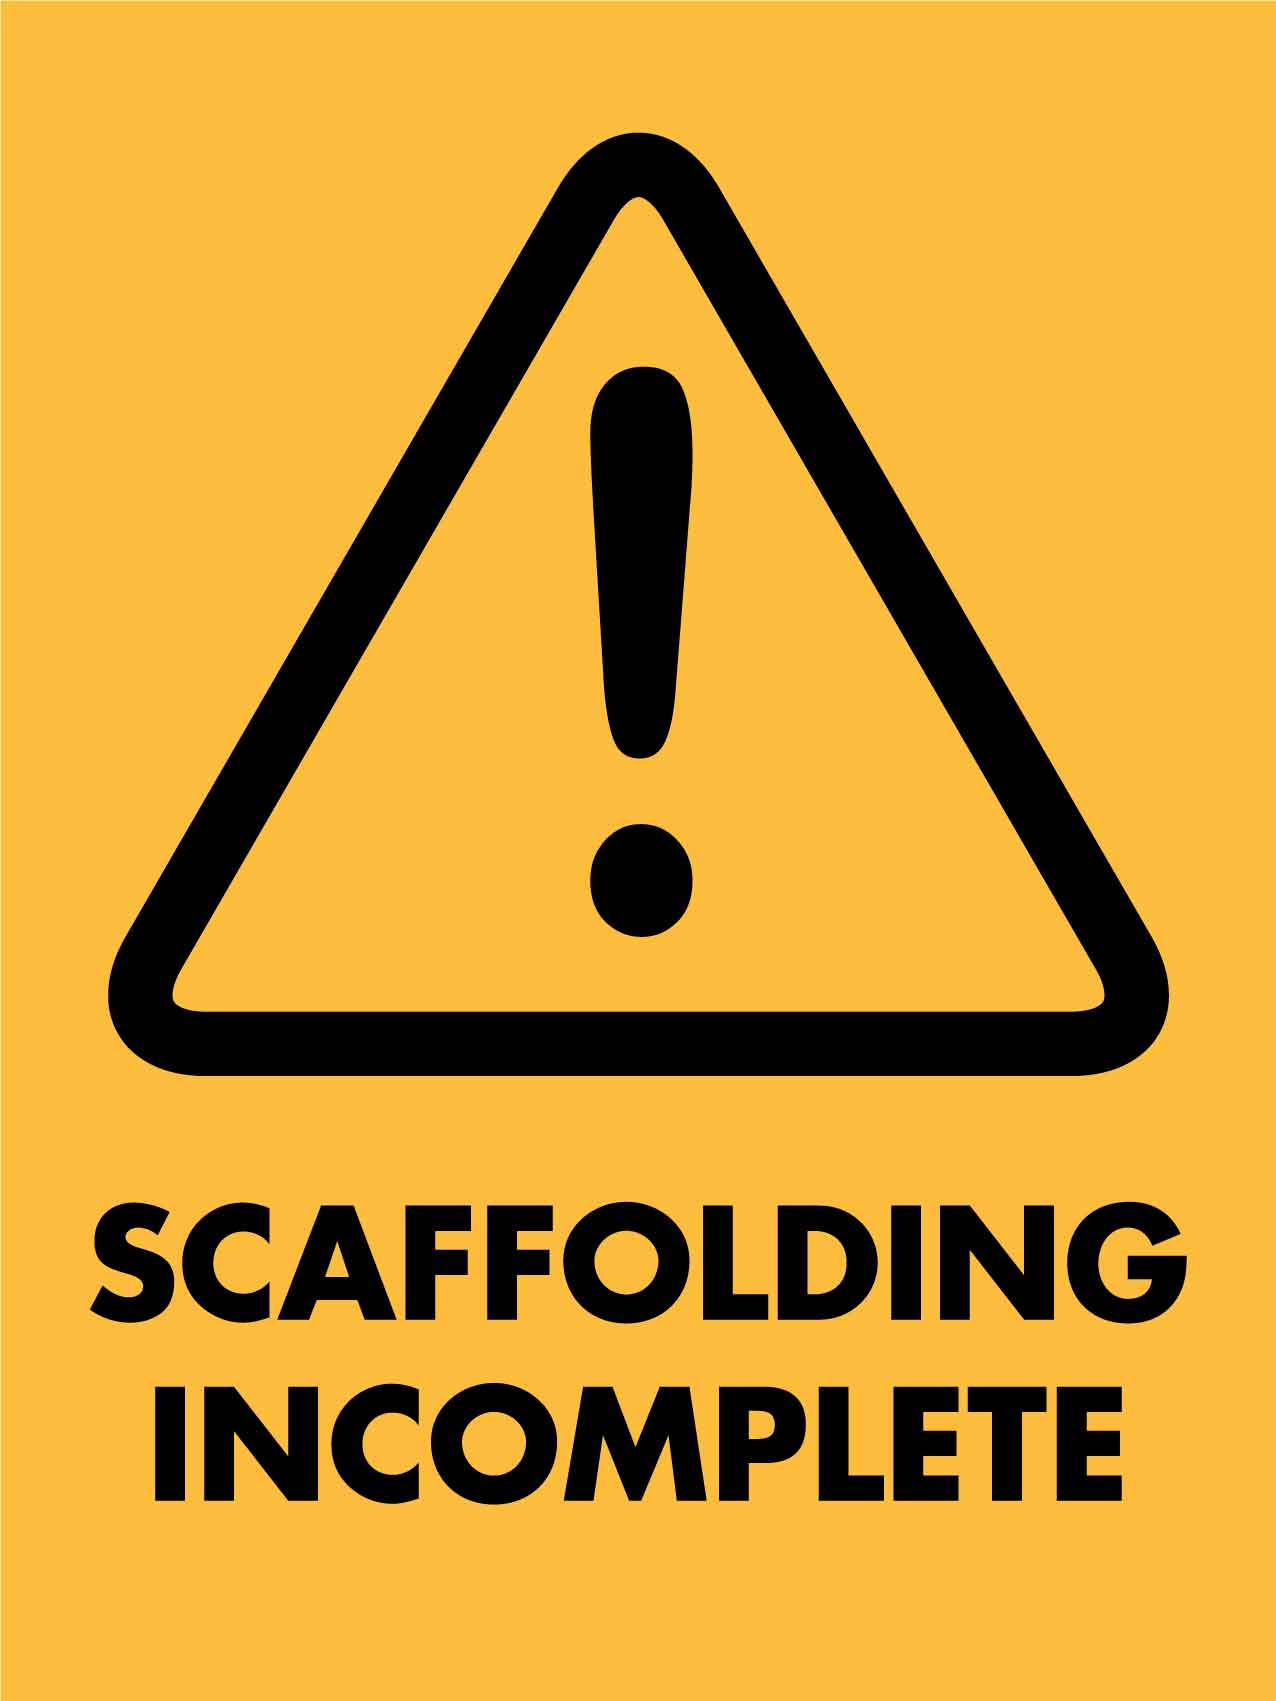 Beware Scaffolding Incomplete Sign